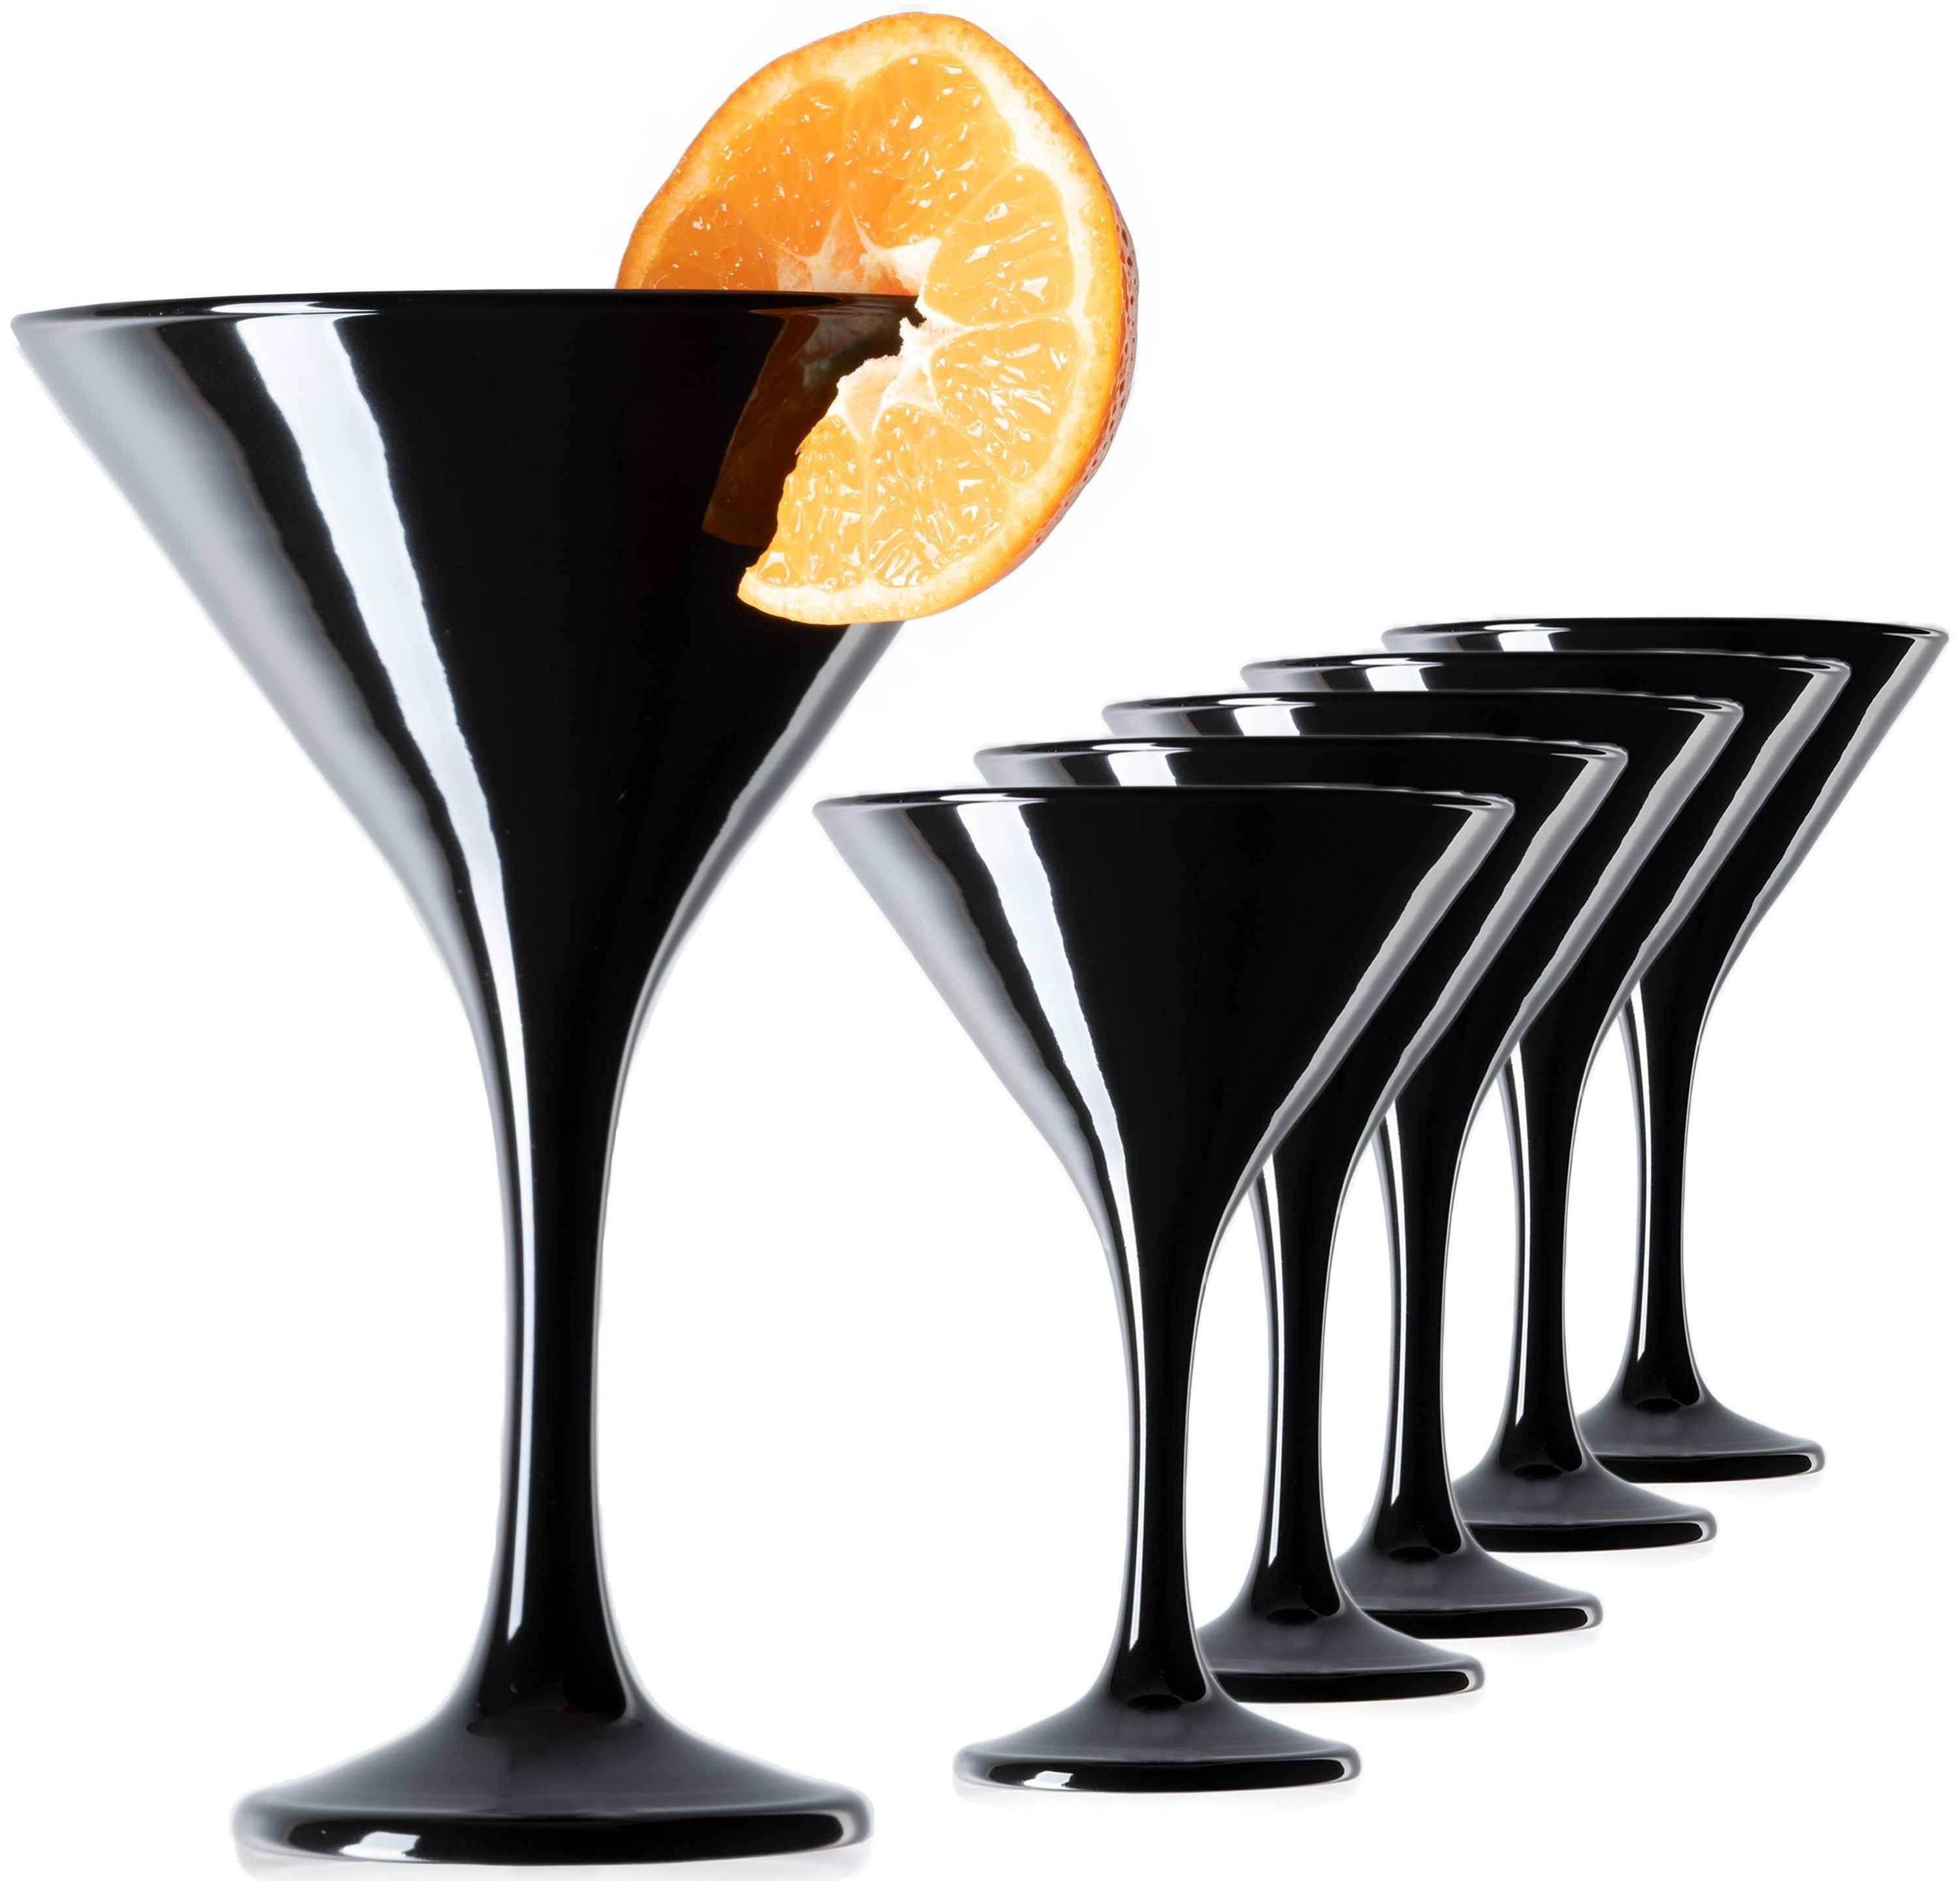 PLATINUX Cocktailglas Schwarze Martini Gläser, Glas, 150ml Set 6-Teilig Cocktailgläser Bargläser Martini Glas Cocktailspitz